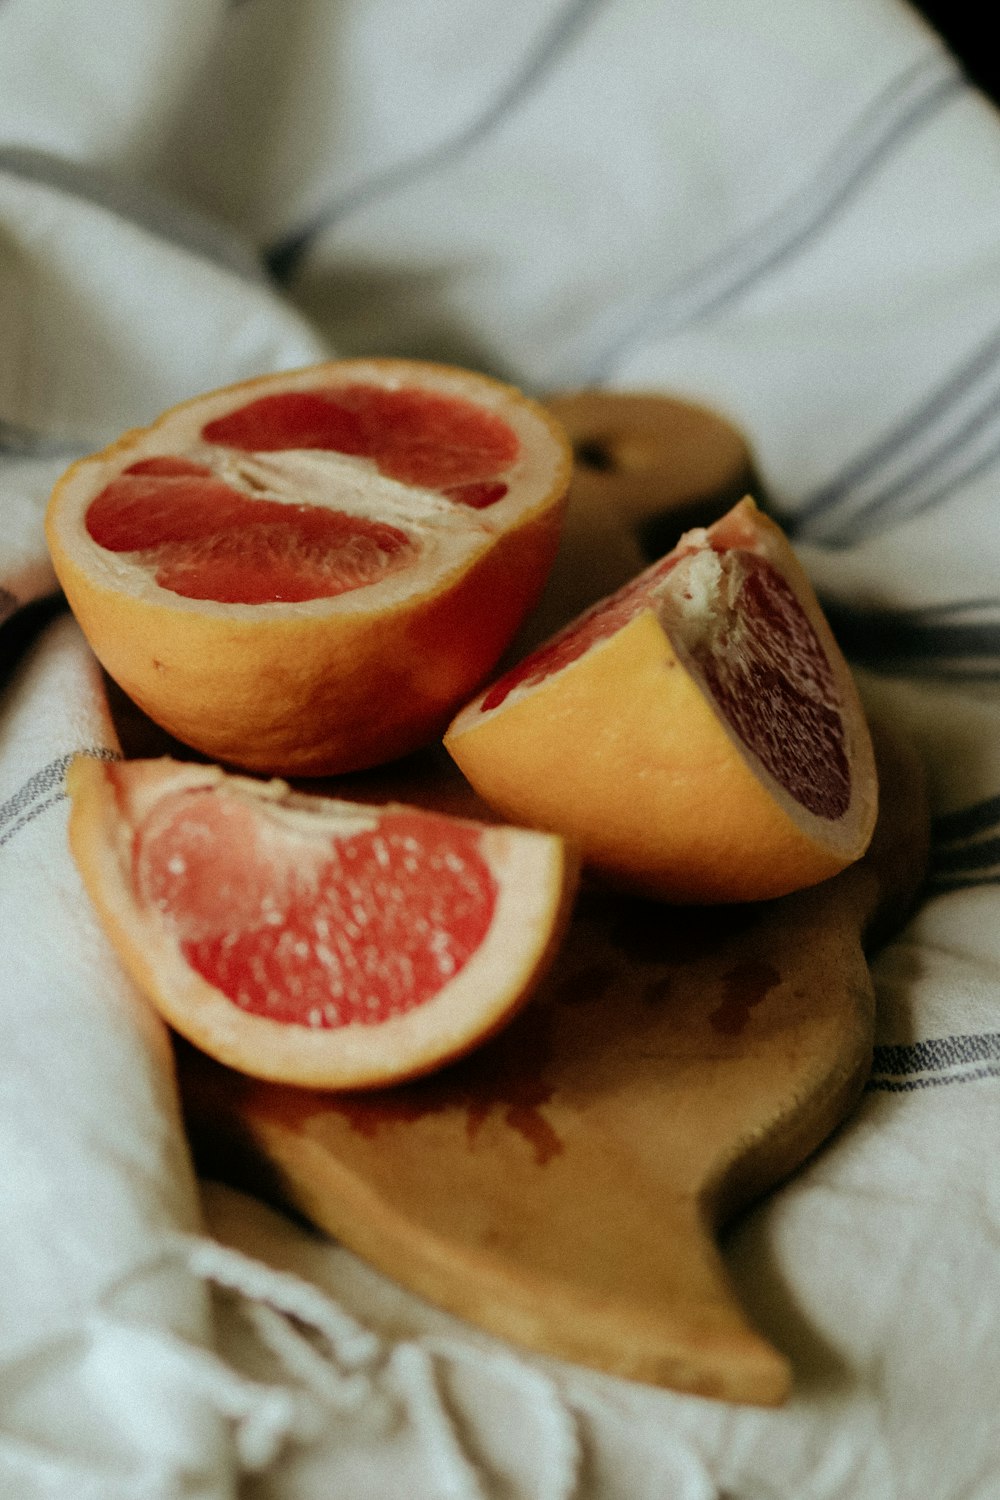 sliced orange fruit on white textile